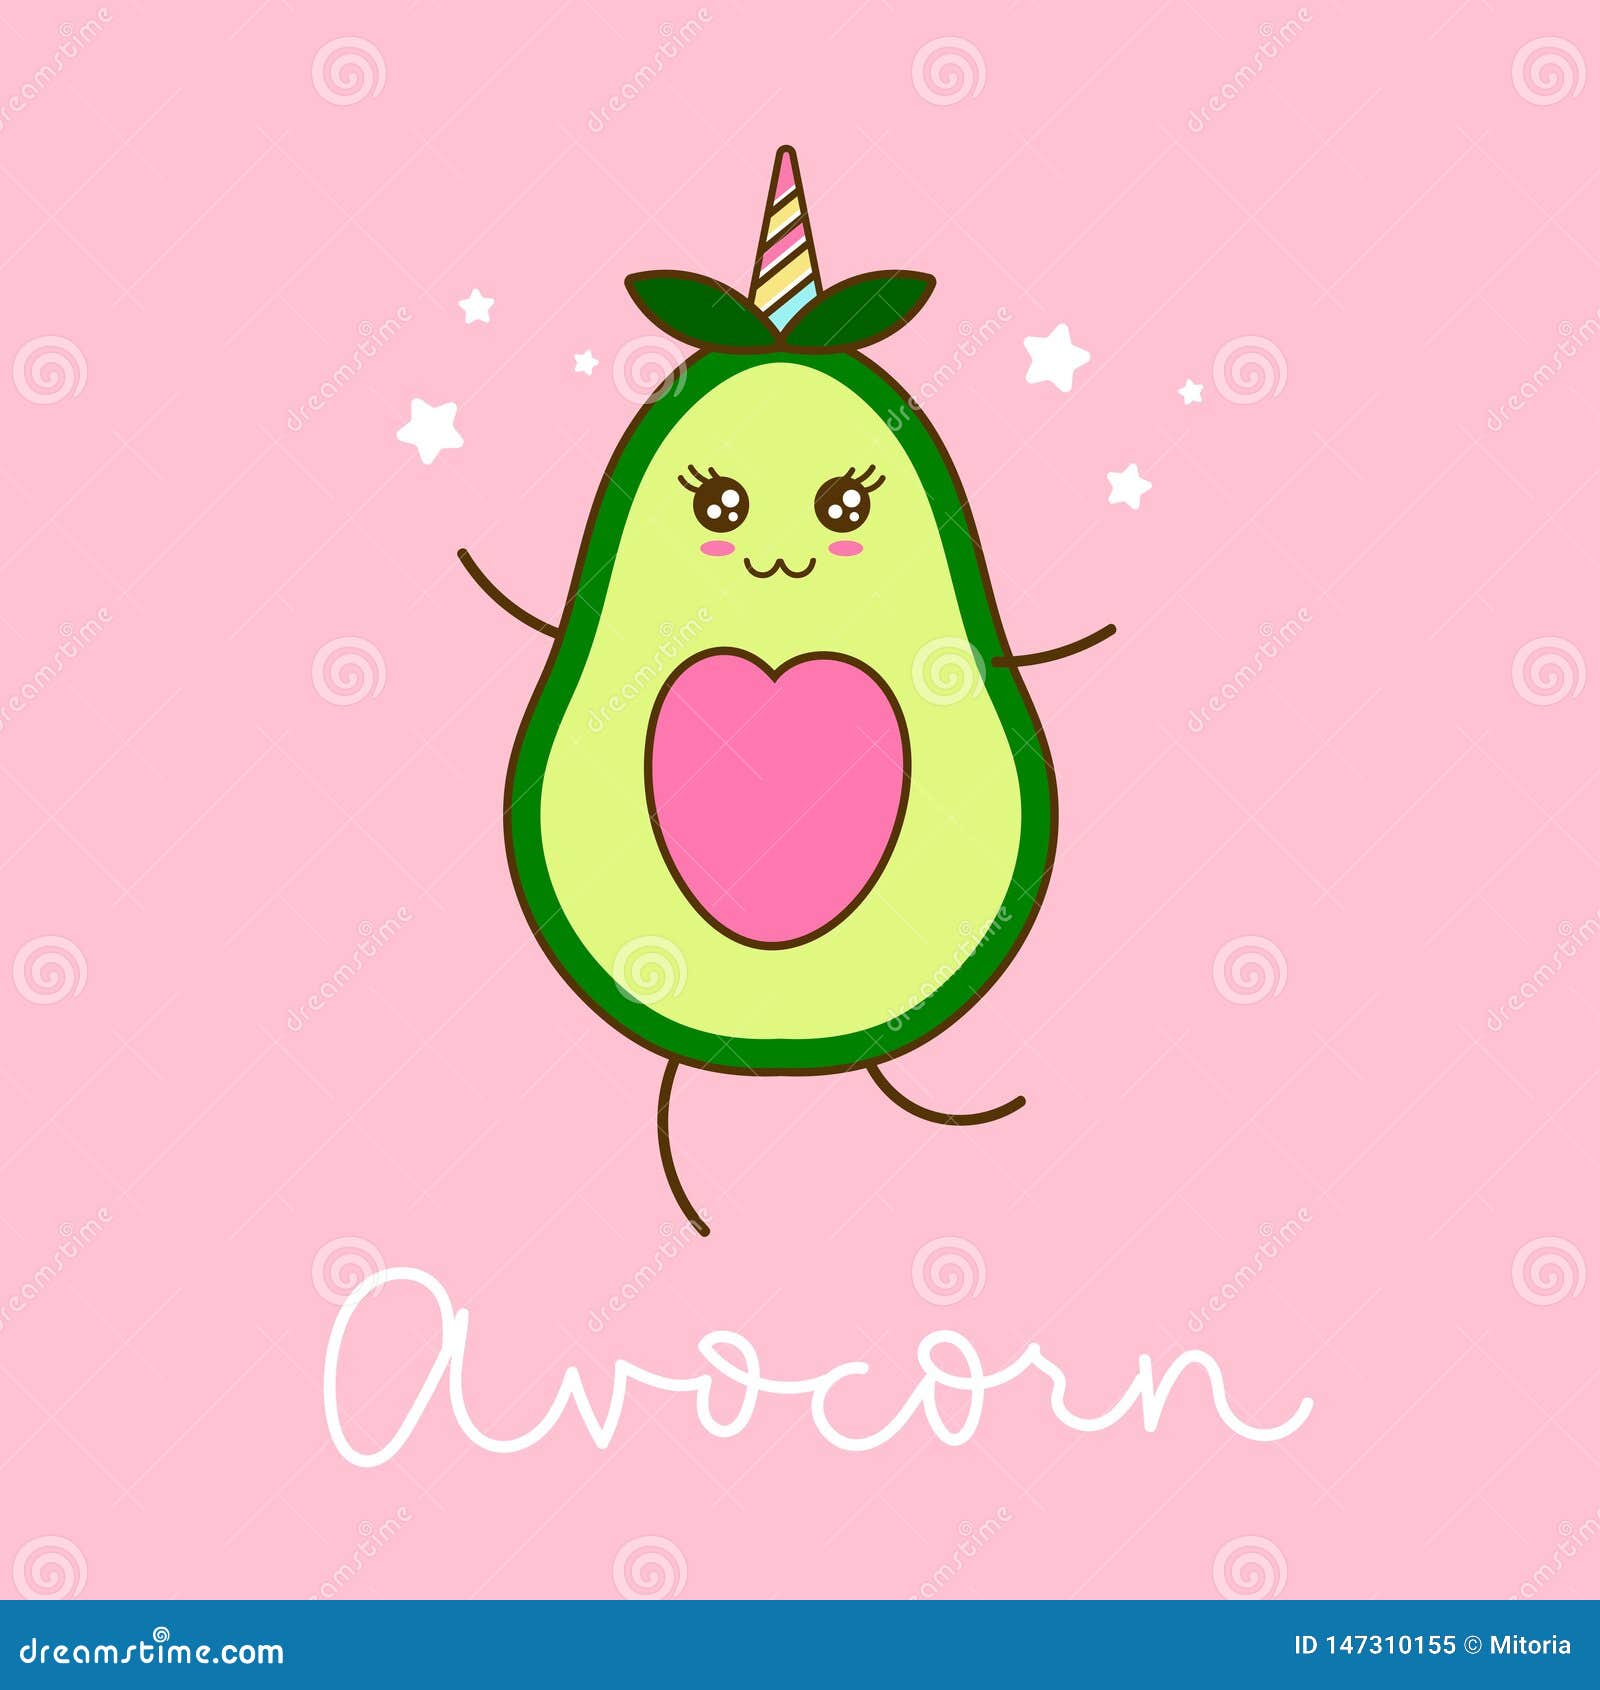 Cute Avocado Stock Illustrations – 3,947 Cute Avocado ...